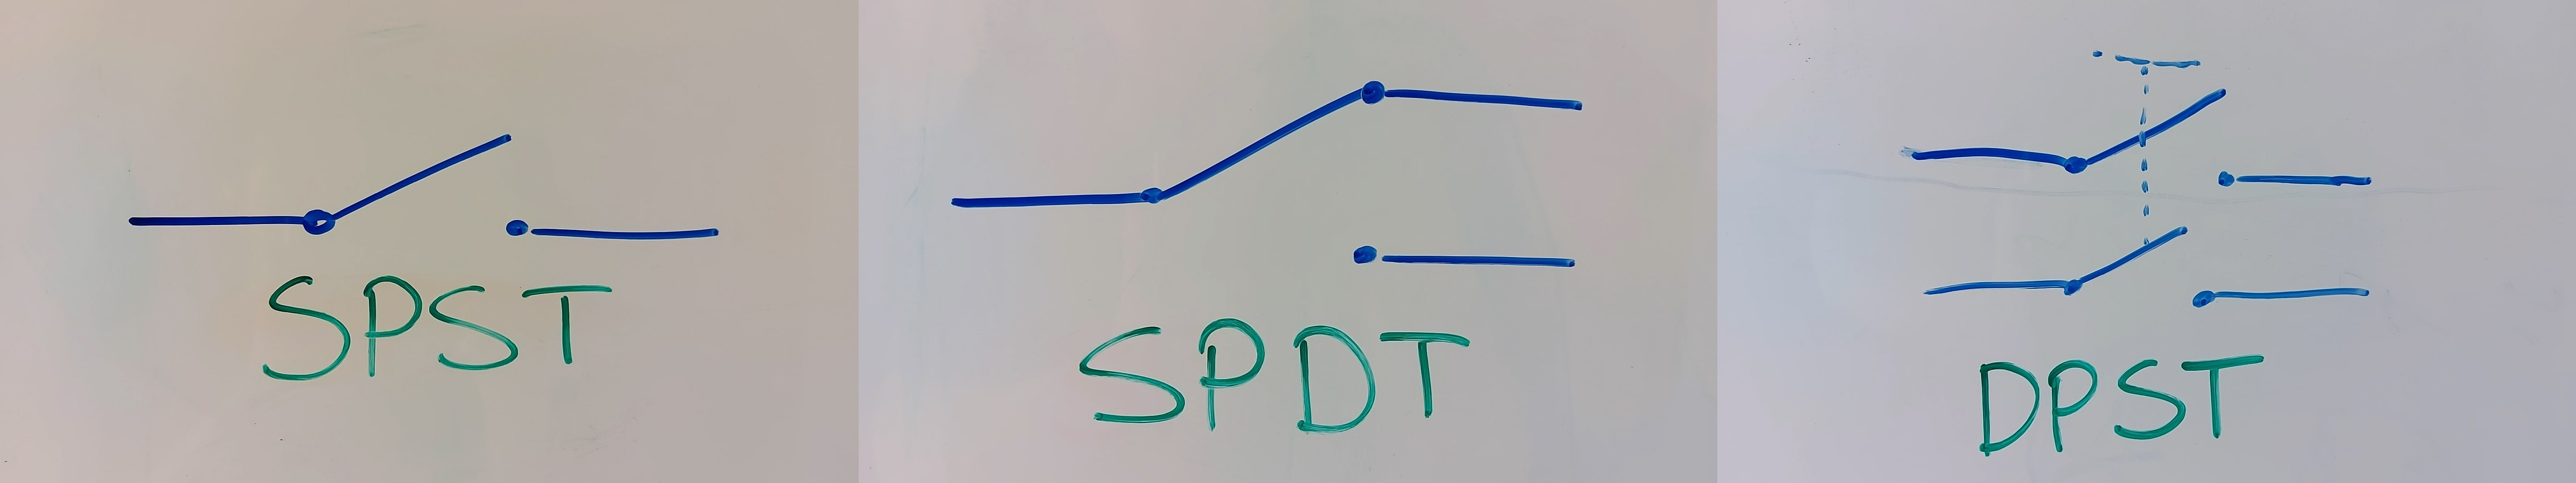 SPST, SPDT, and DPST symbols